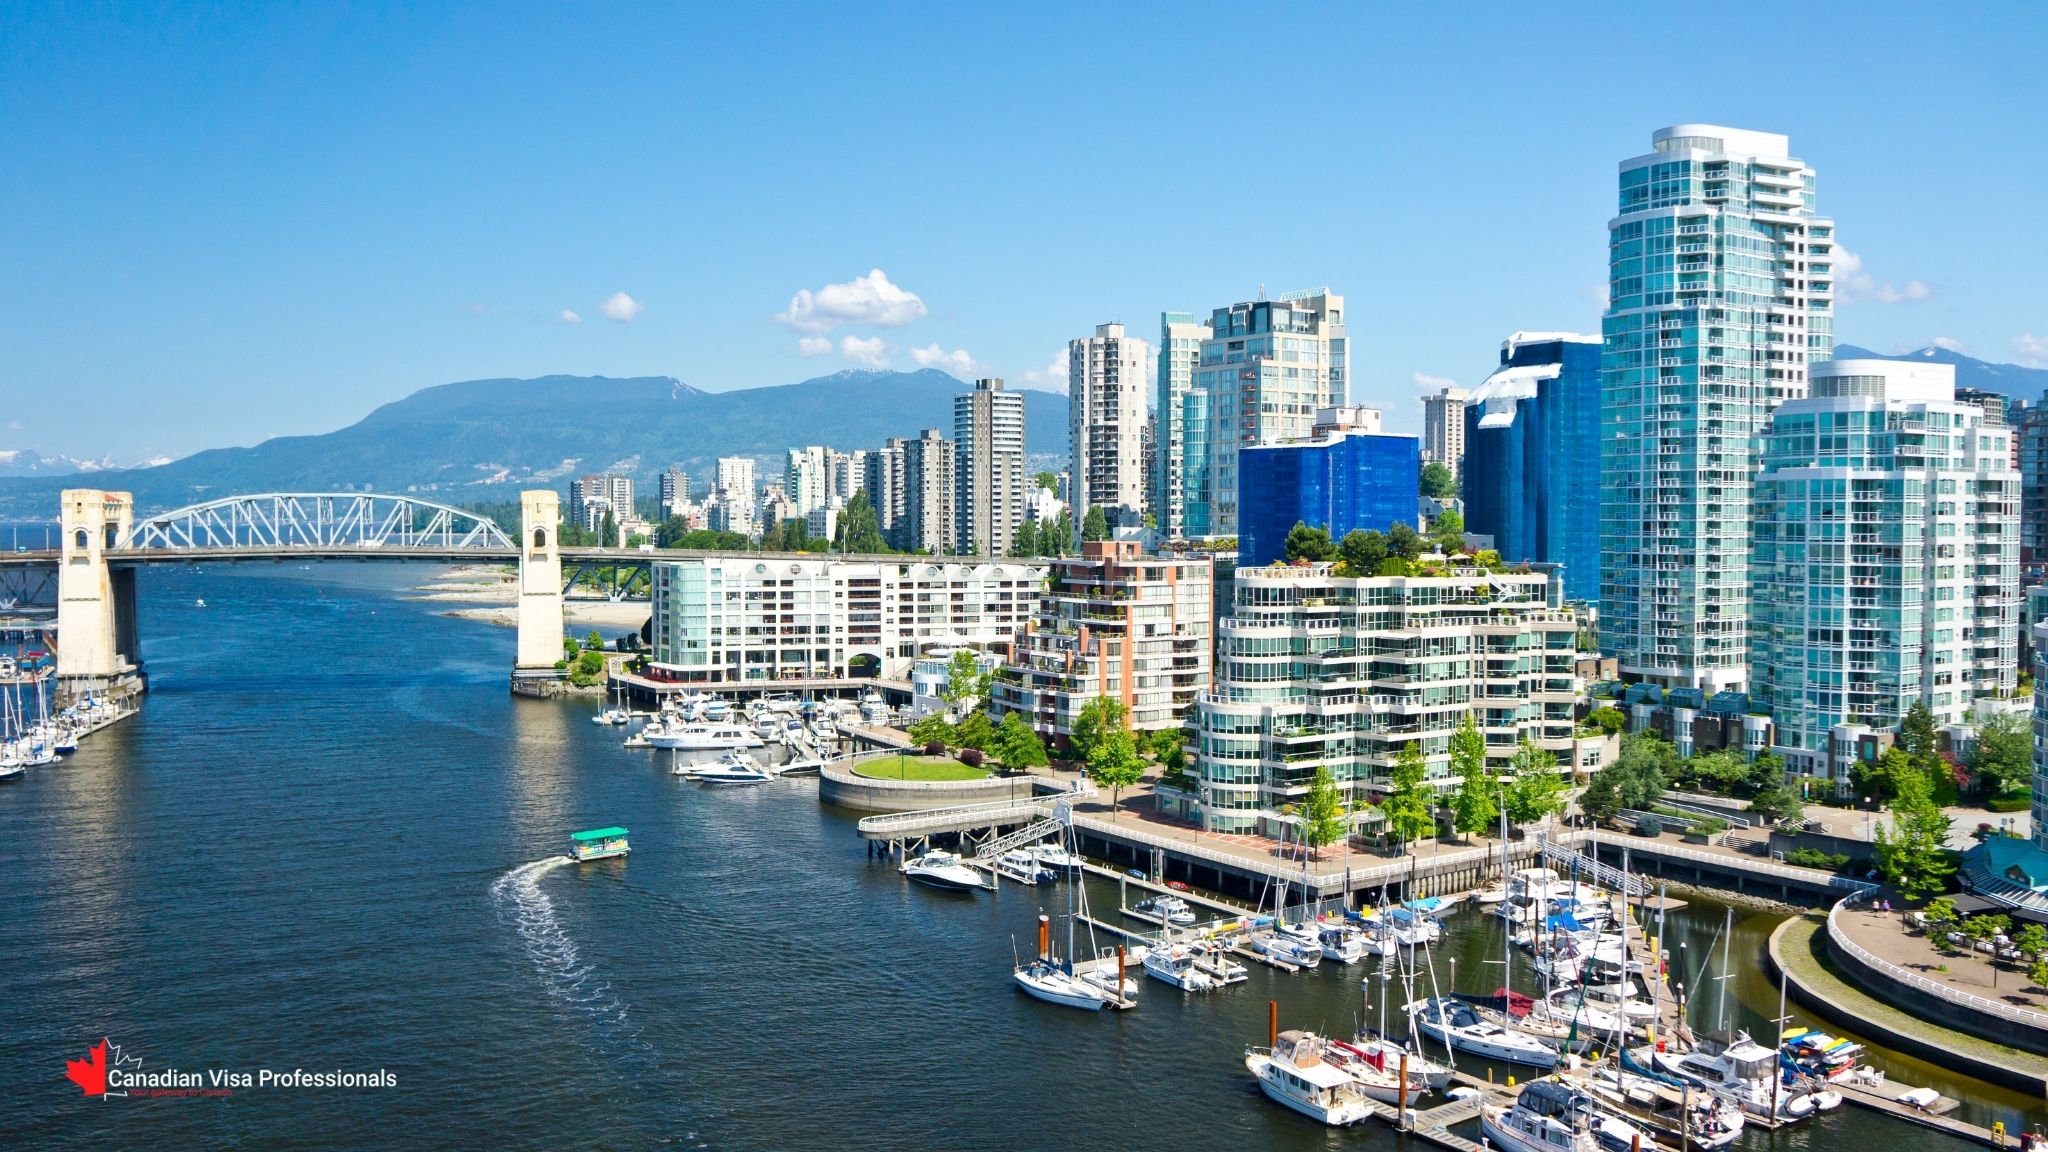 Canadian Visa Professionals – Columbia Británica